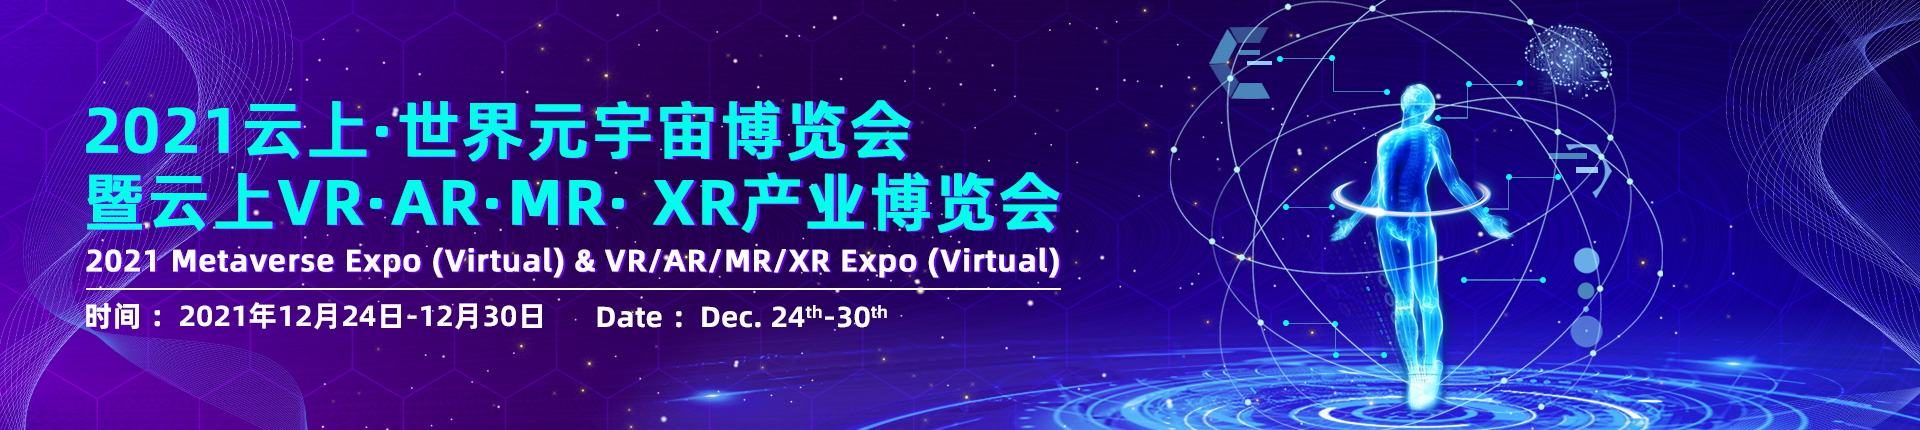 2021 Metaverse Expo (Virtual) & VR/AR/MR/XR Expo (Virtual) 